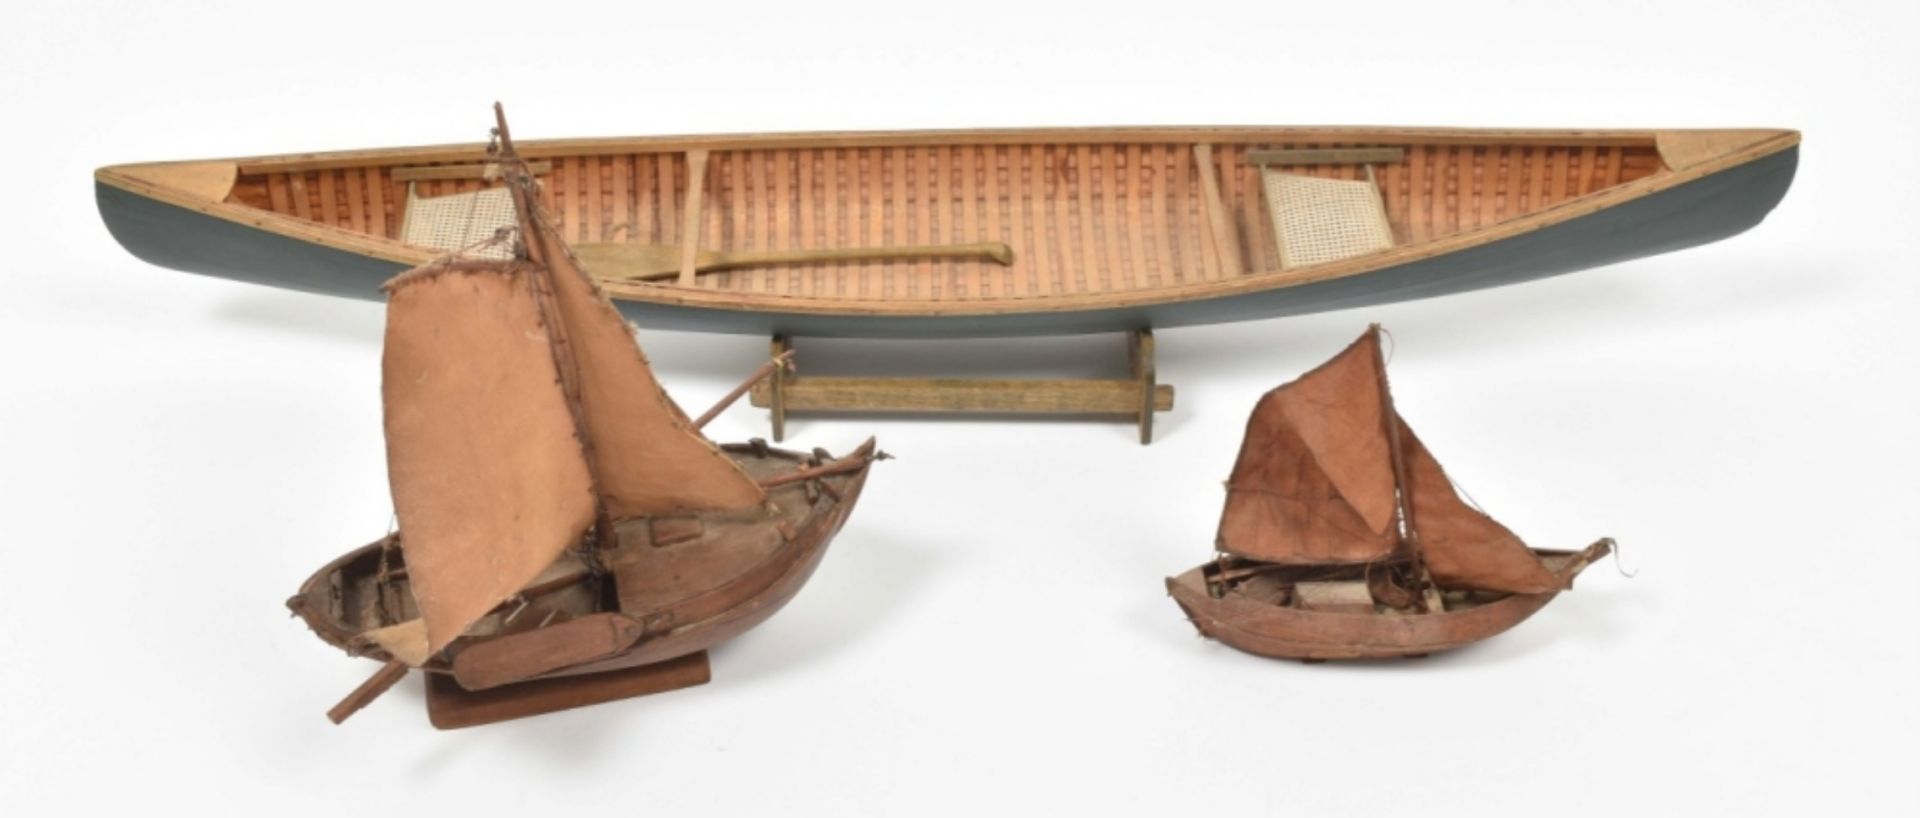 Historic model of a canoe